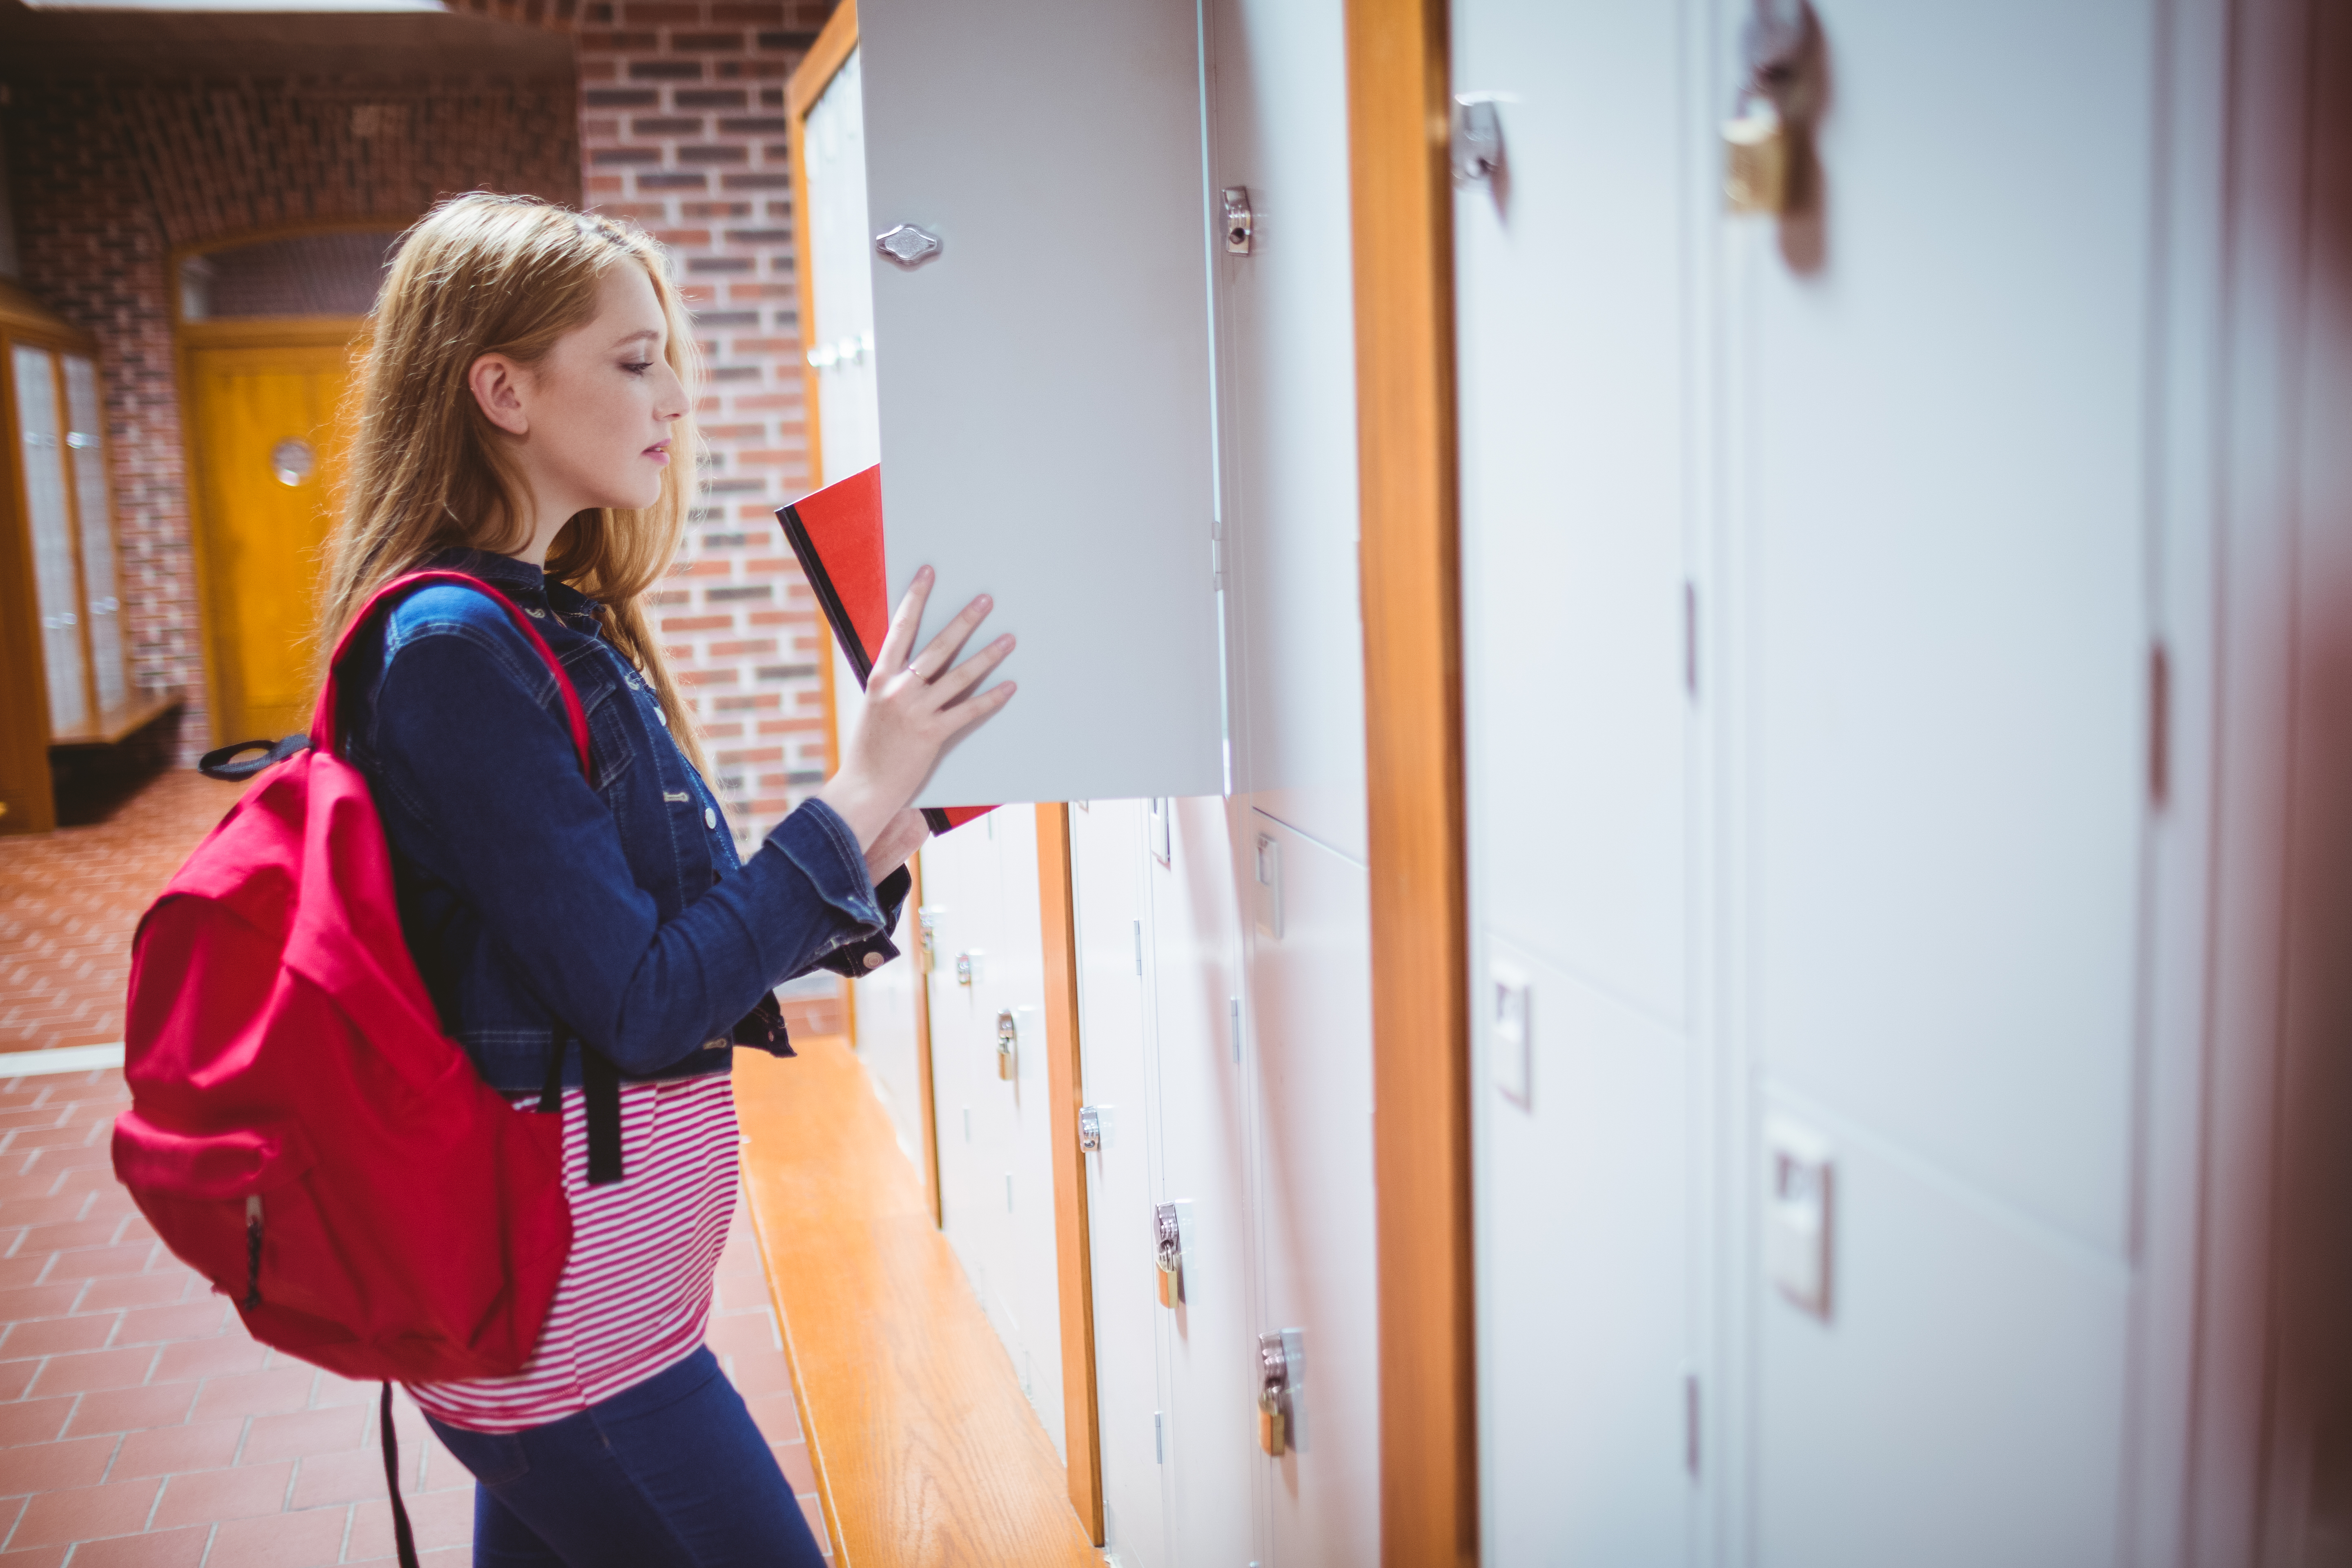 A student putting books in a locker | Source: Shutterstock